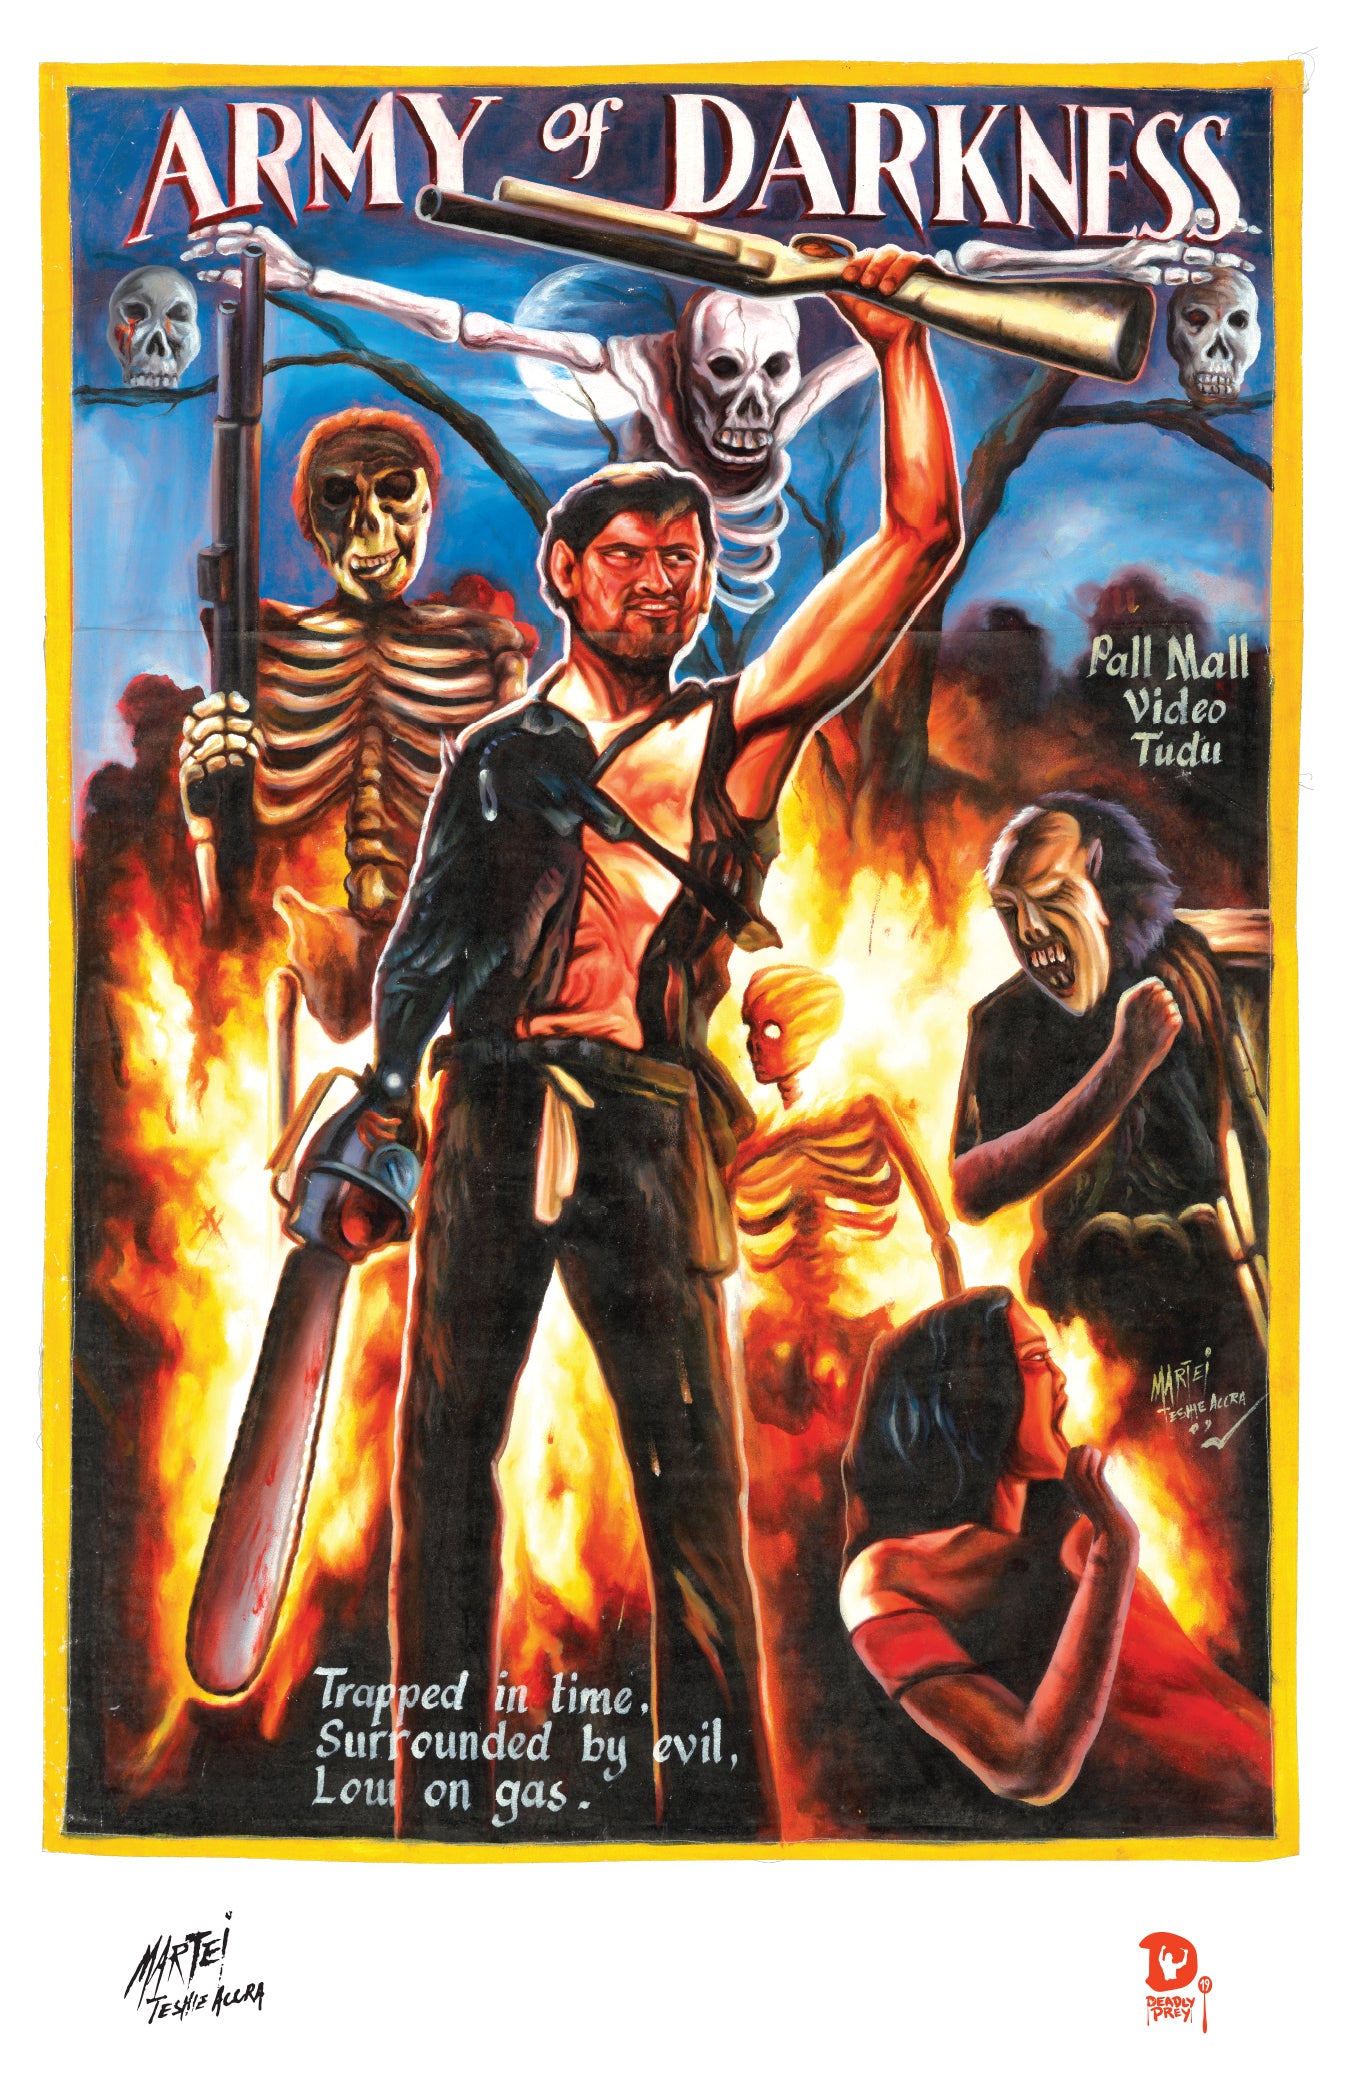 Evil Dead Film Poster Print - The Original Underground